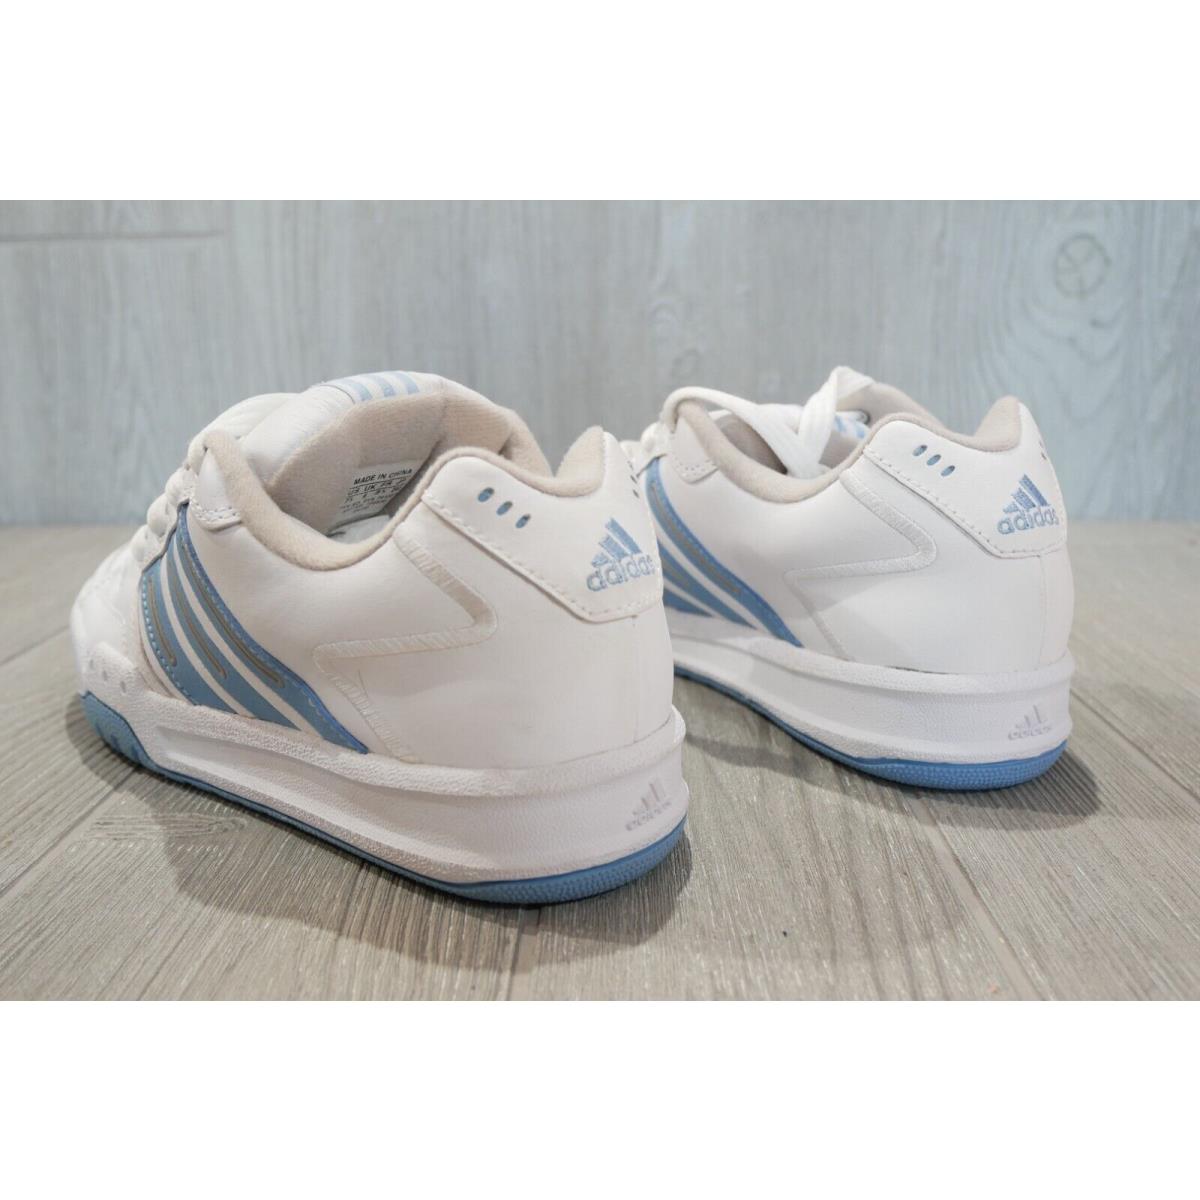 Vintage Adidas Beta II Skate White Blue Shoes 2002 Womens Size  |  692740848549 - Adidas shoes - White | SporTipTop